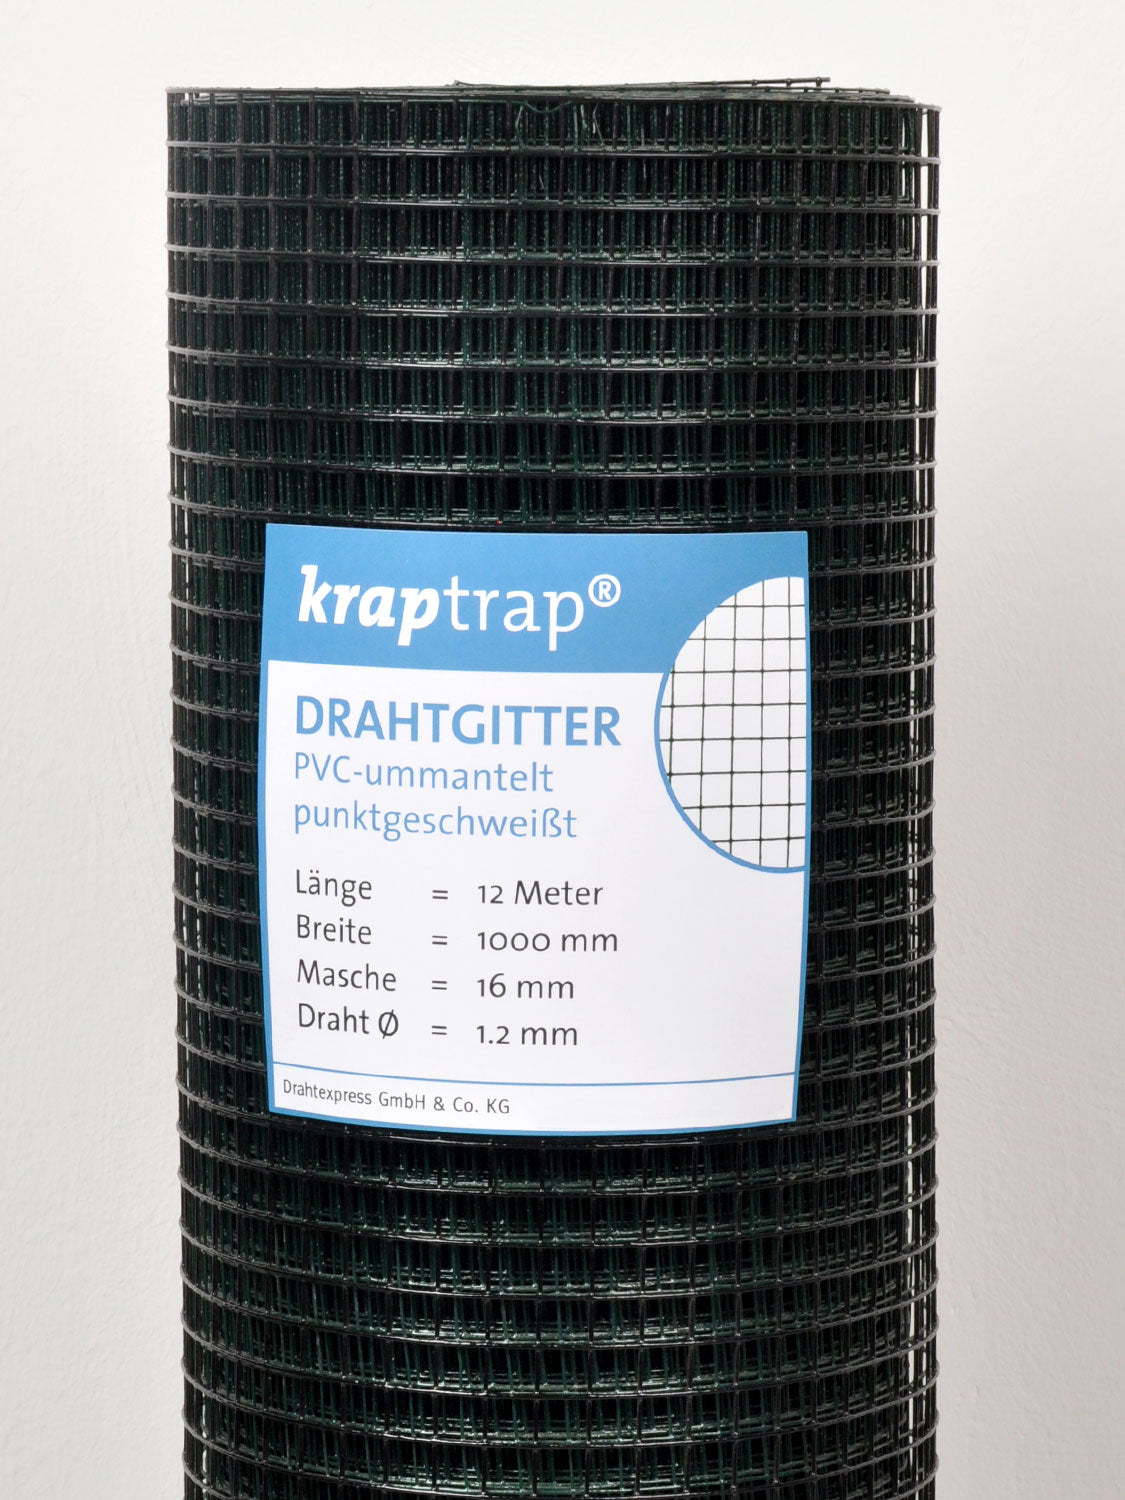 Kraptrap® Volierendraht Drahtgitter 16 mm Masche, 100 cm breit, schwarz ummantelt